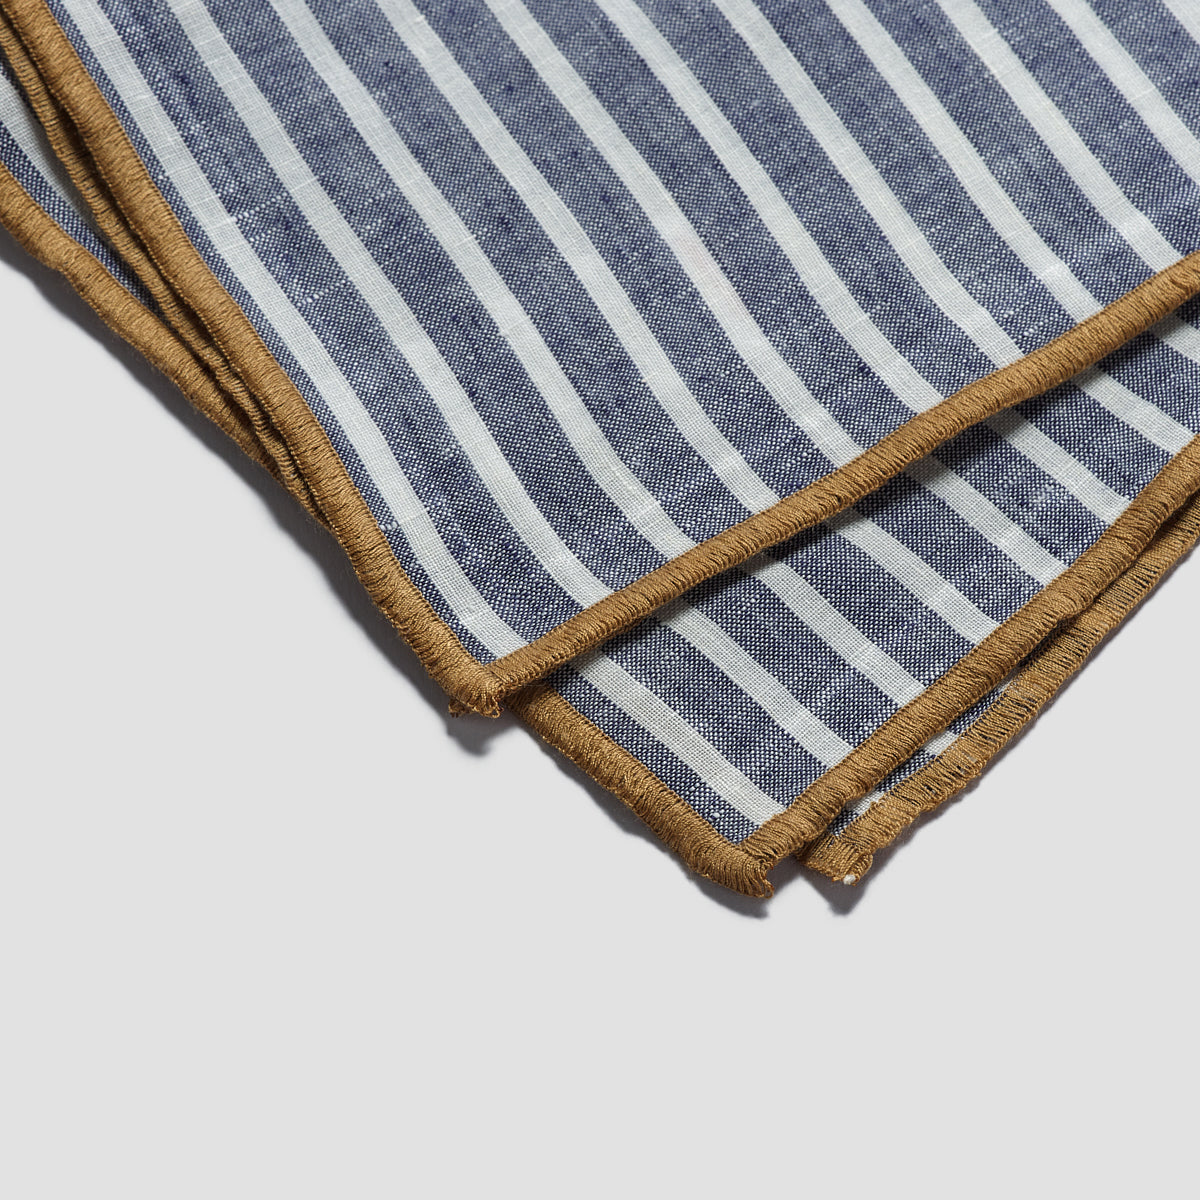 Midnight Stripe Linen Table Runner - Piglet in Bed